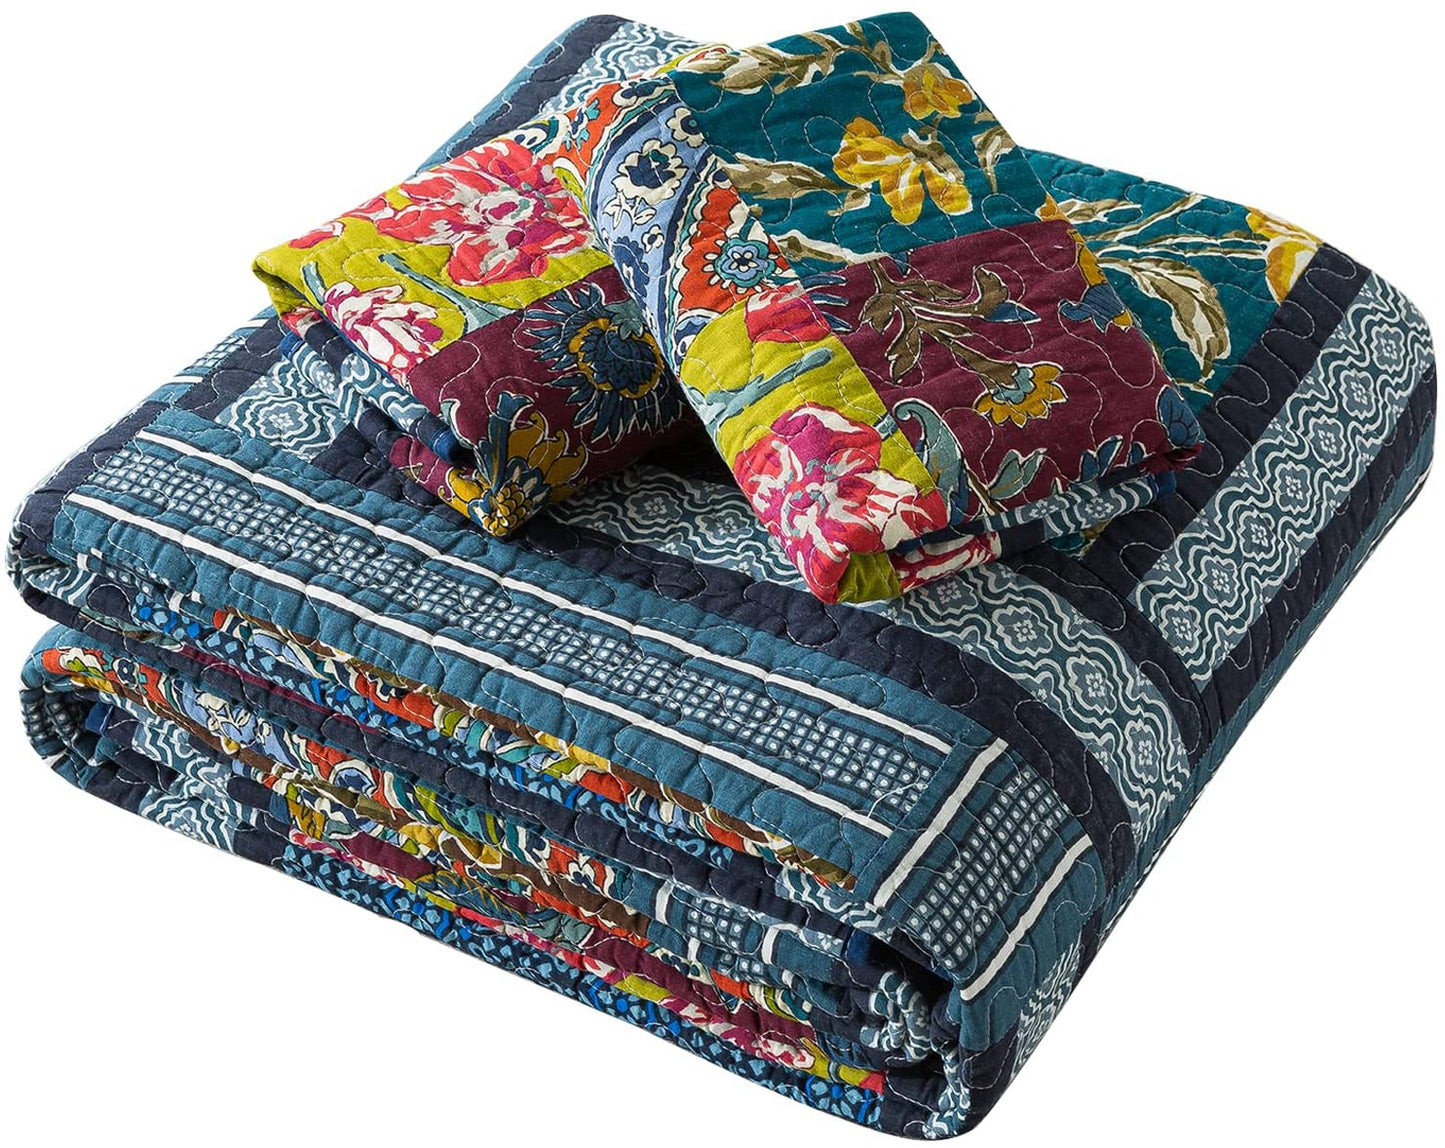 Pure Cotton Bohemian Garden Grid Pattern Reversible 3 Pieces Quilt Set with 2 Pillowcases